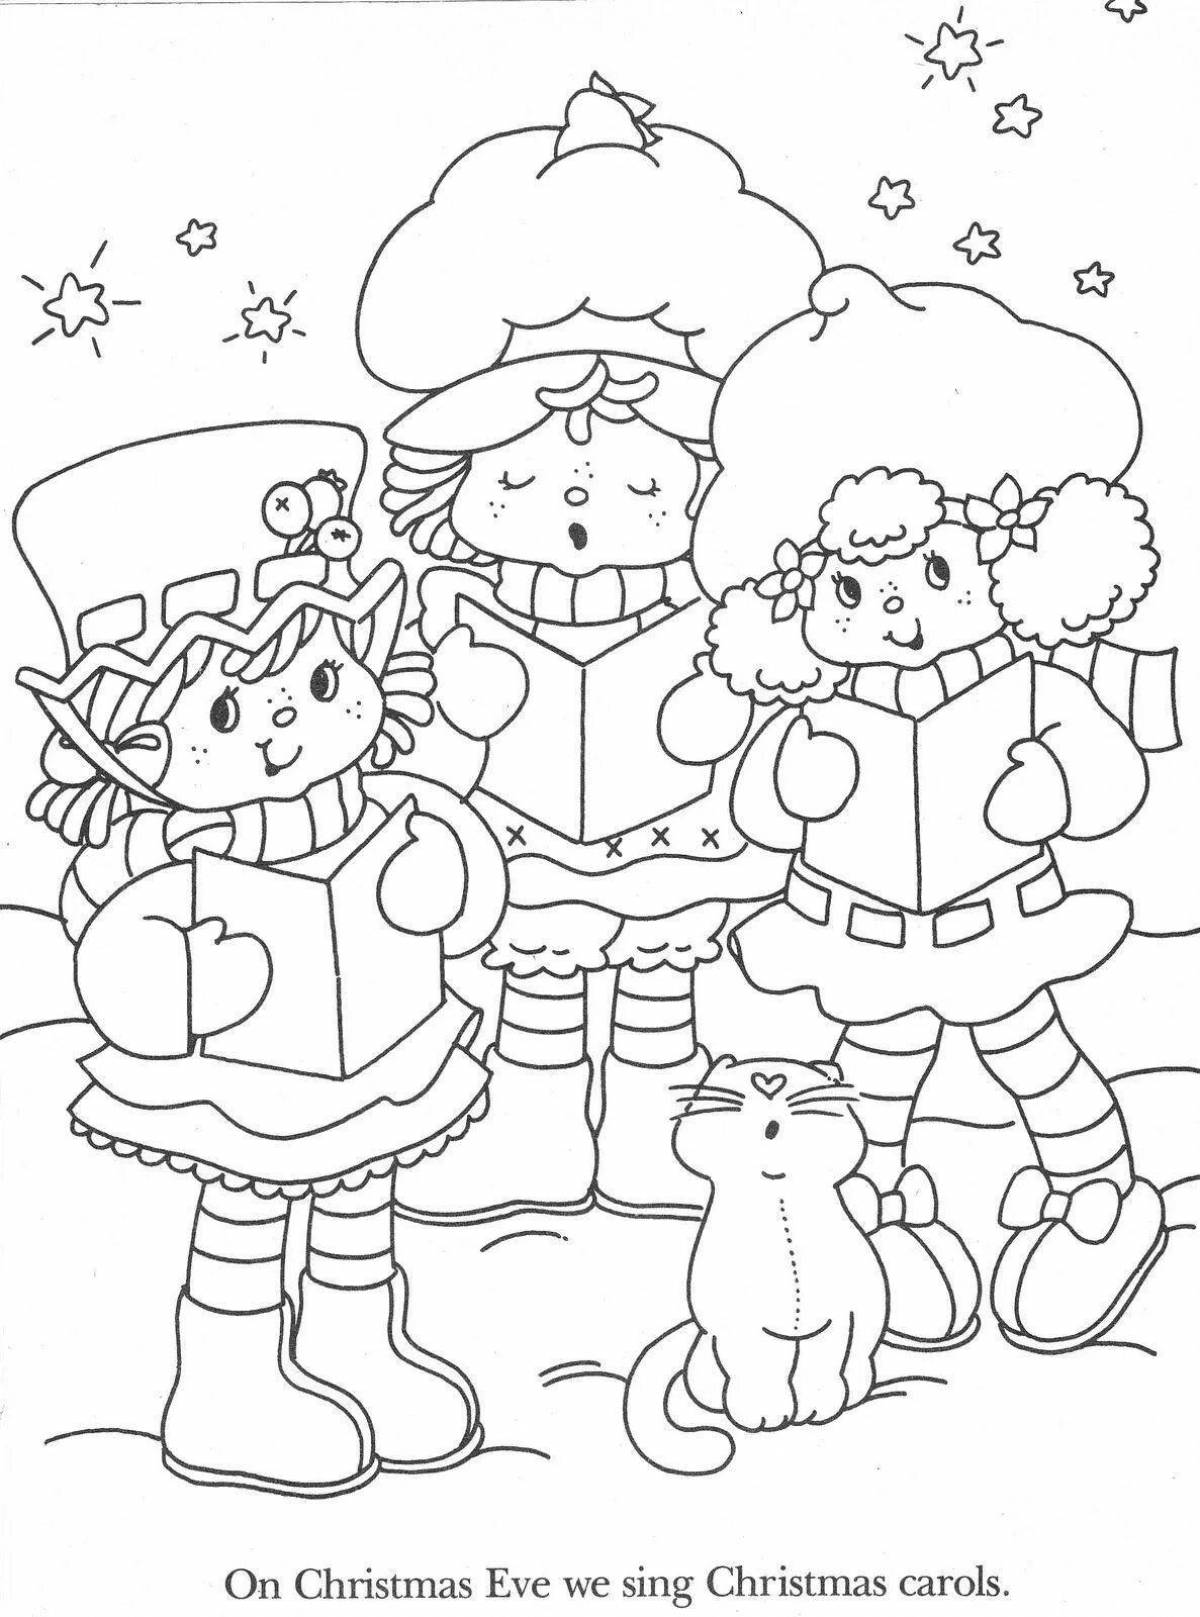 Christmas carols glamor coloring book